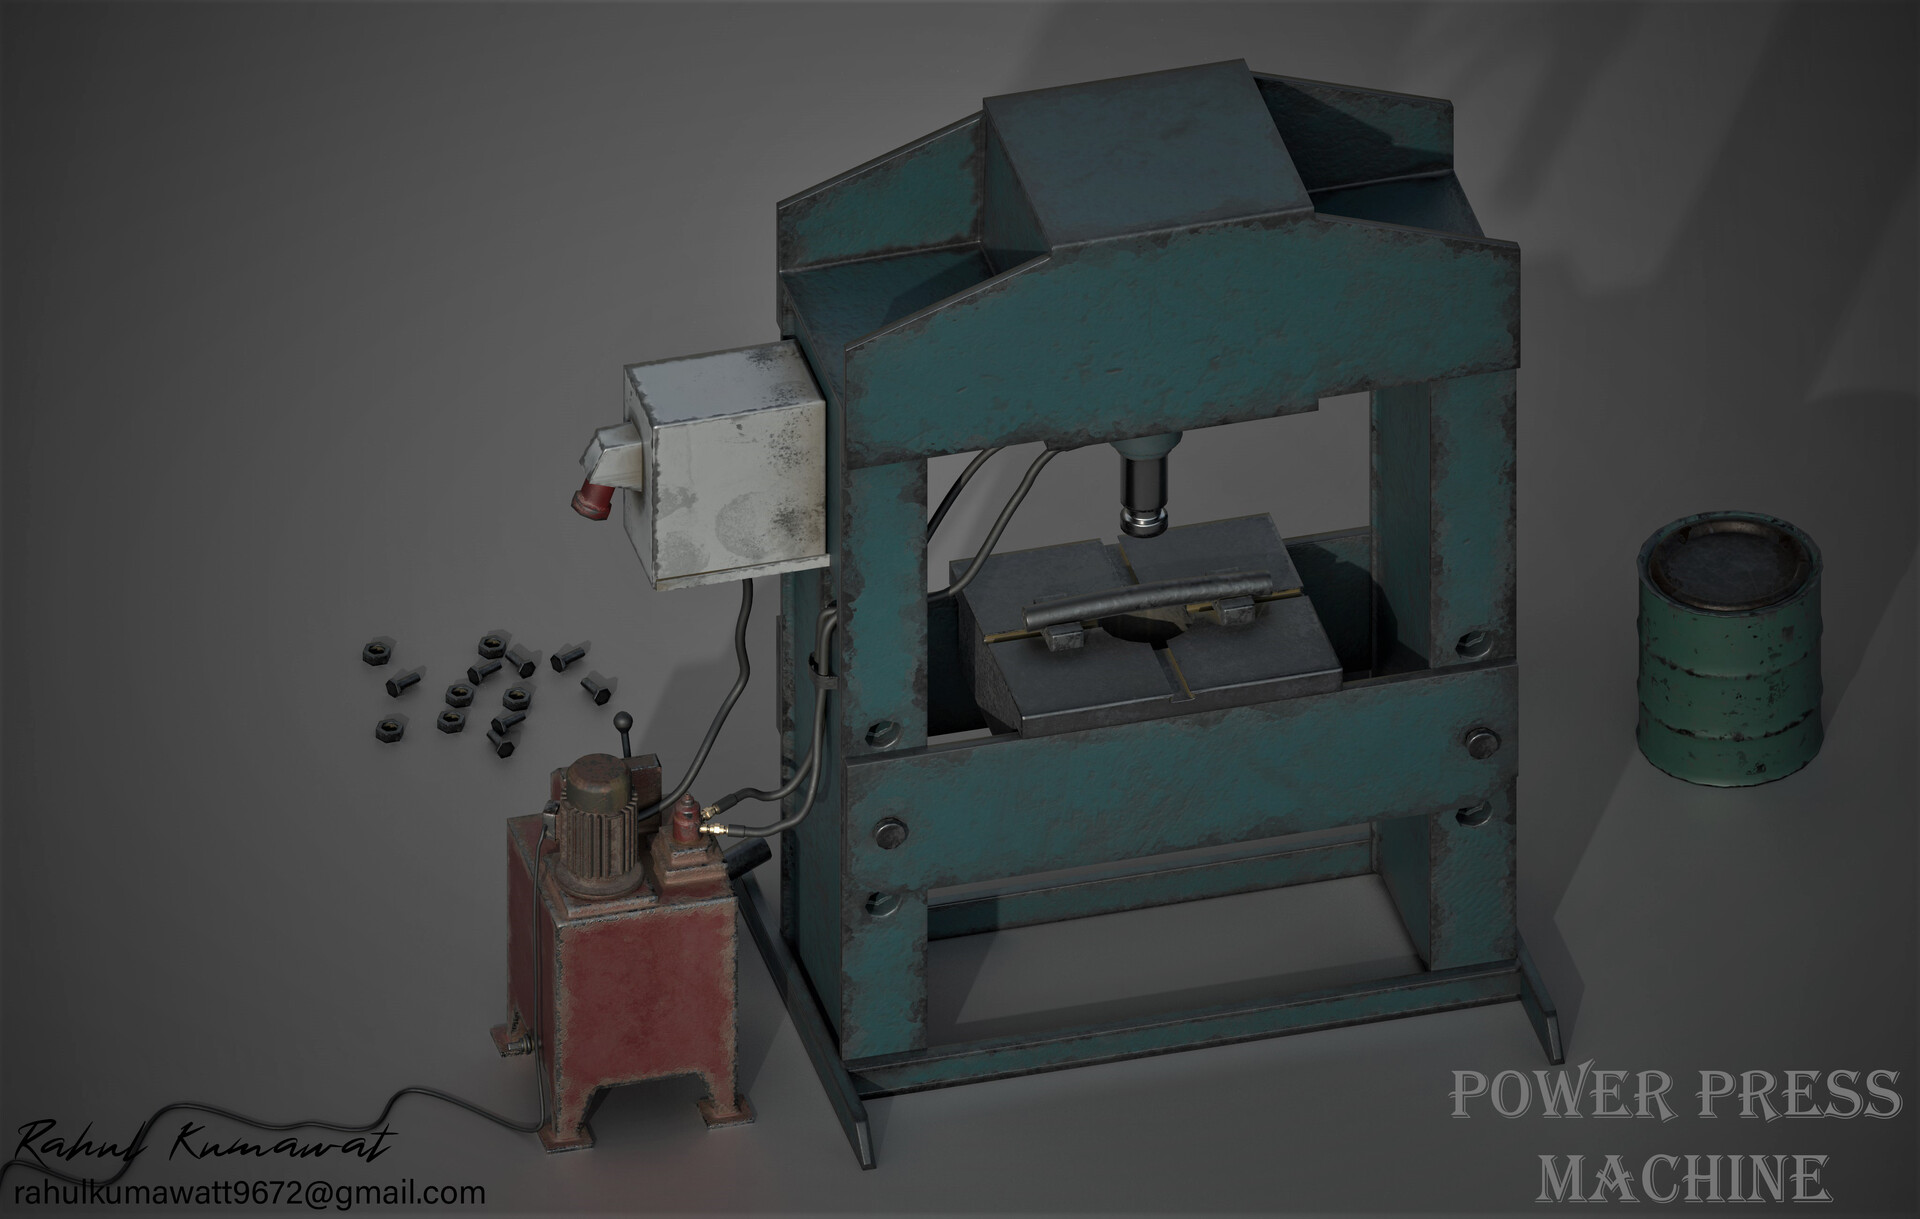 ArtStation - Power Press Machine